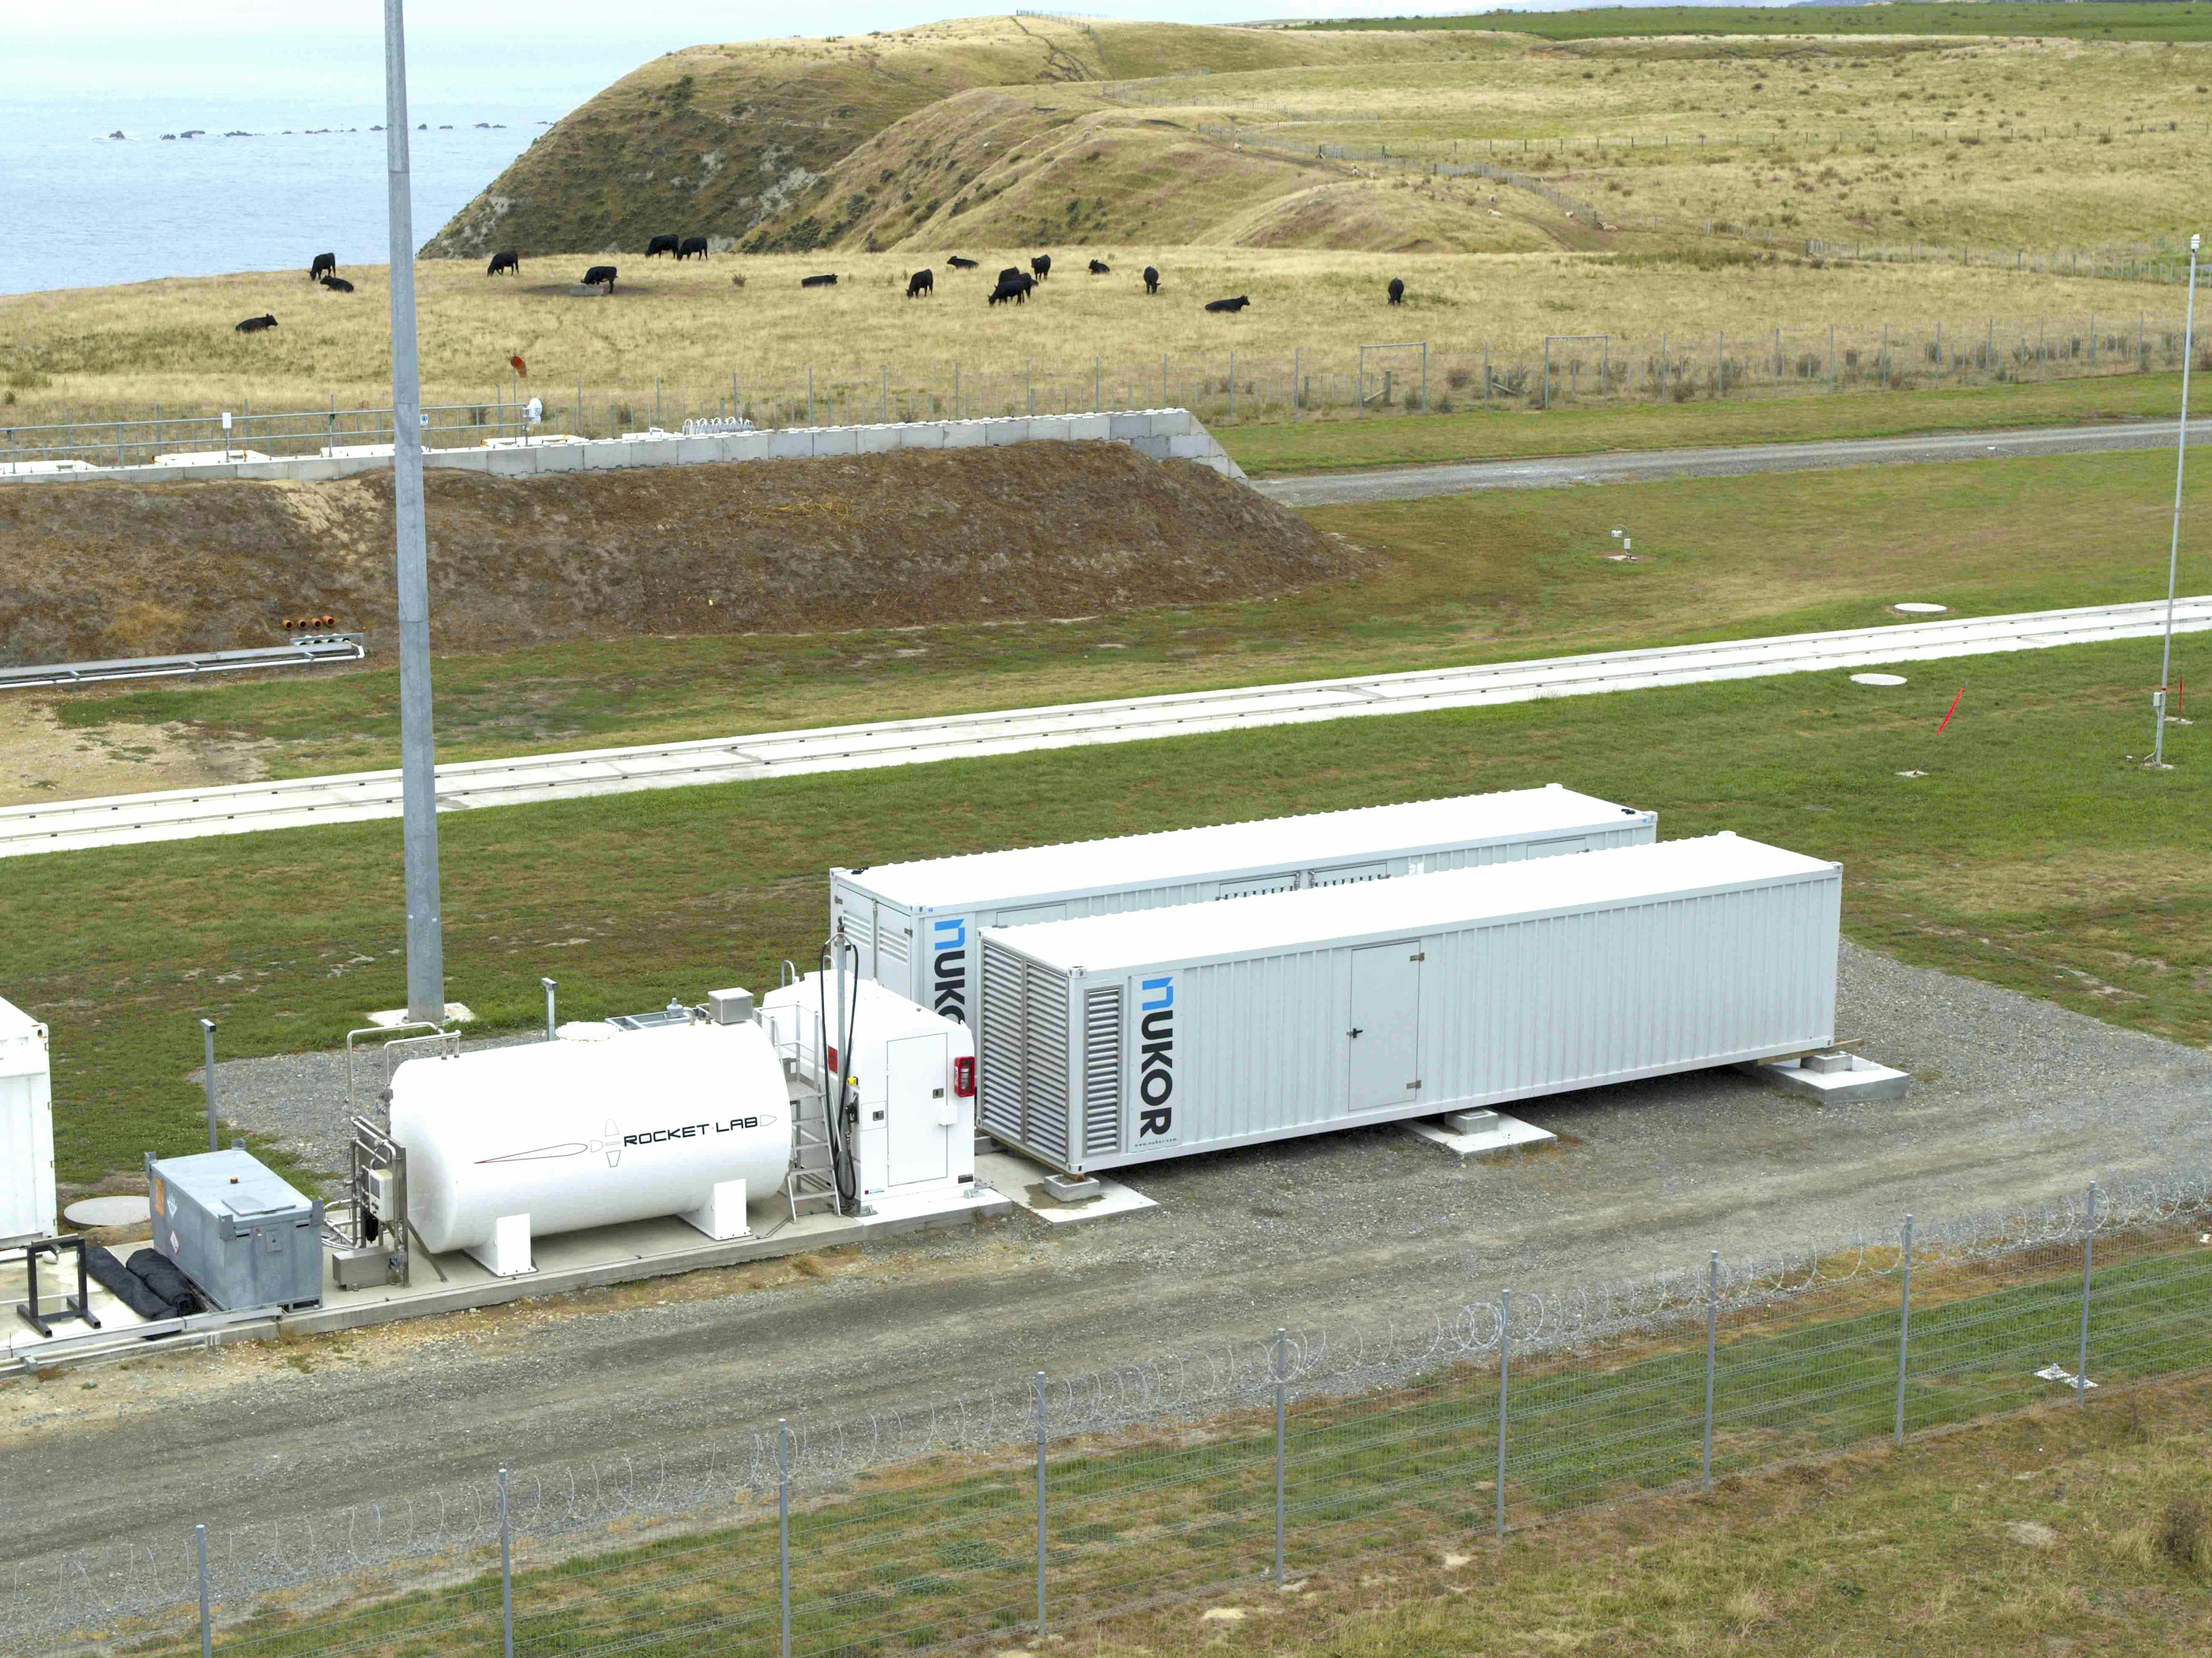 Off grid power generators for Rocket Lab